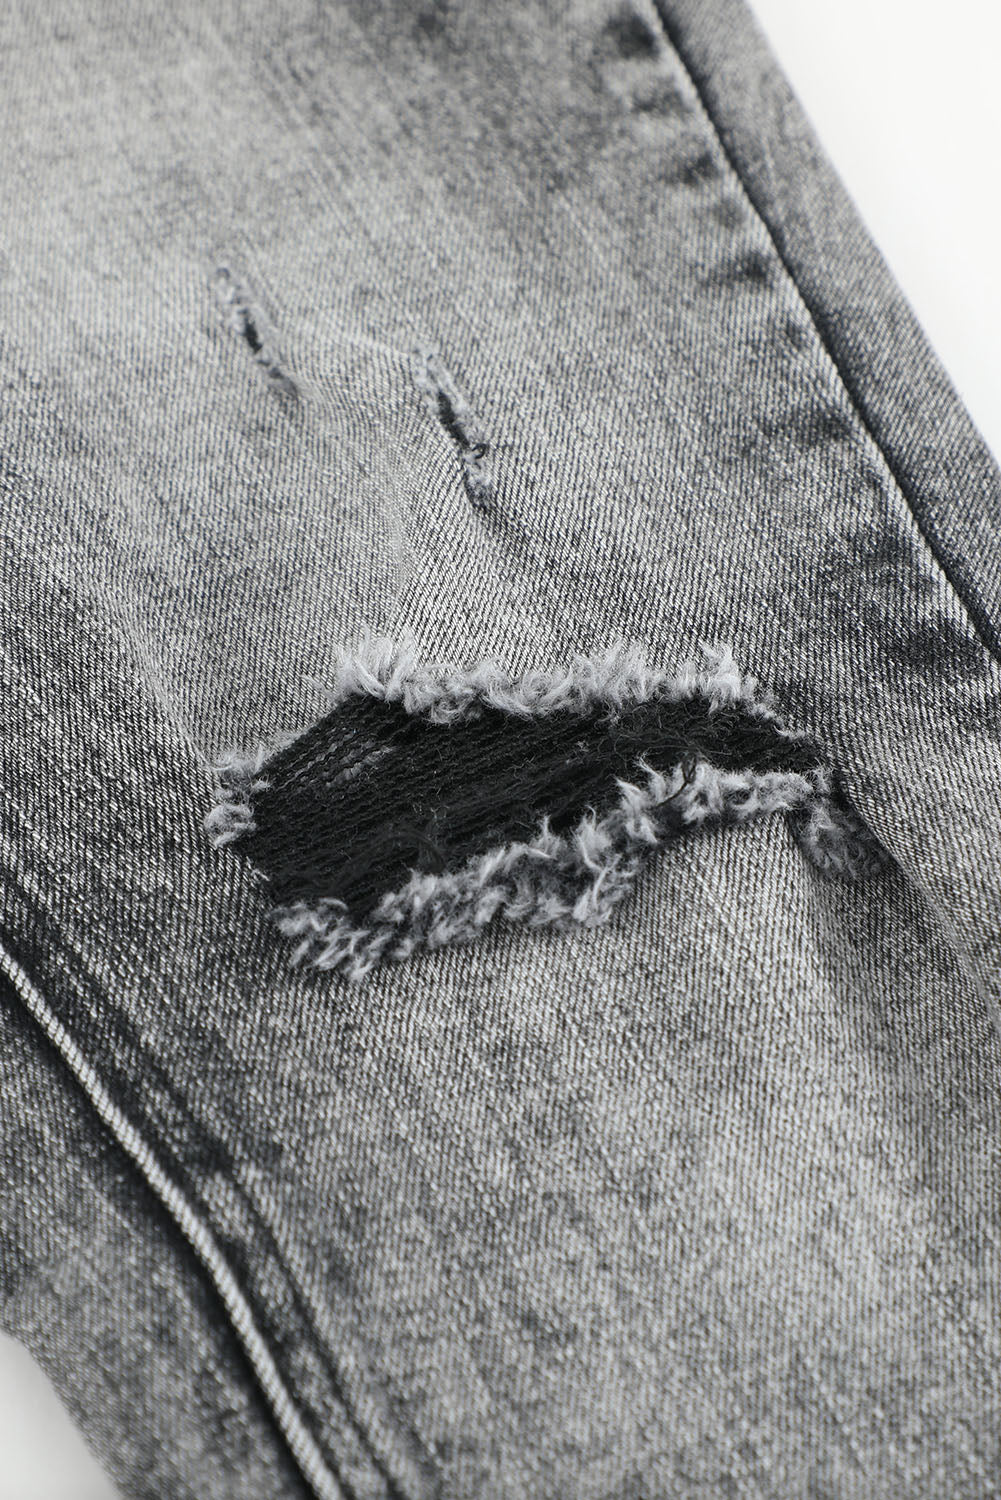 Acid Wash Raw Hem Distressed Jeans Jeans JT's Designer Fashion